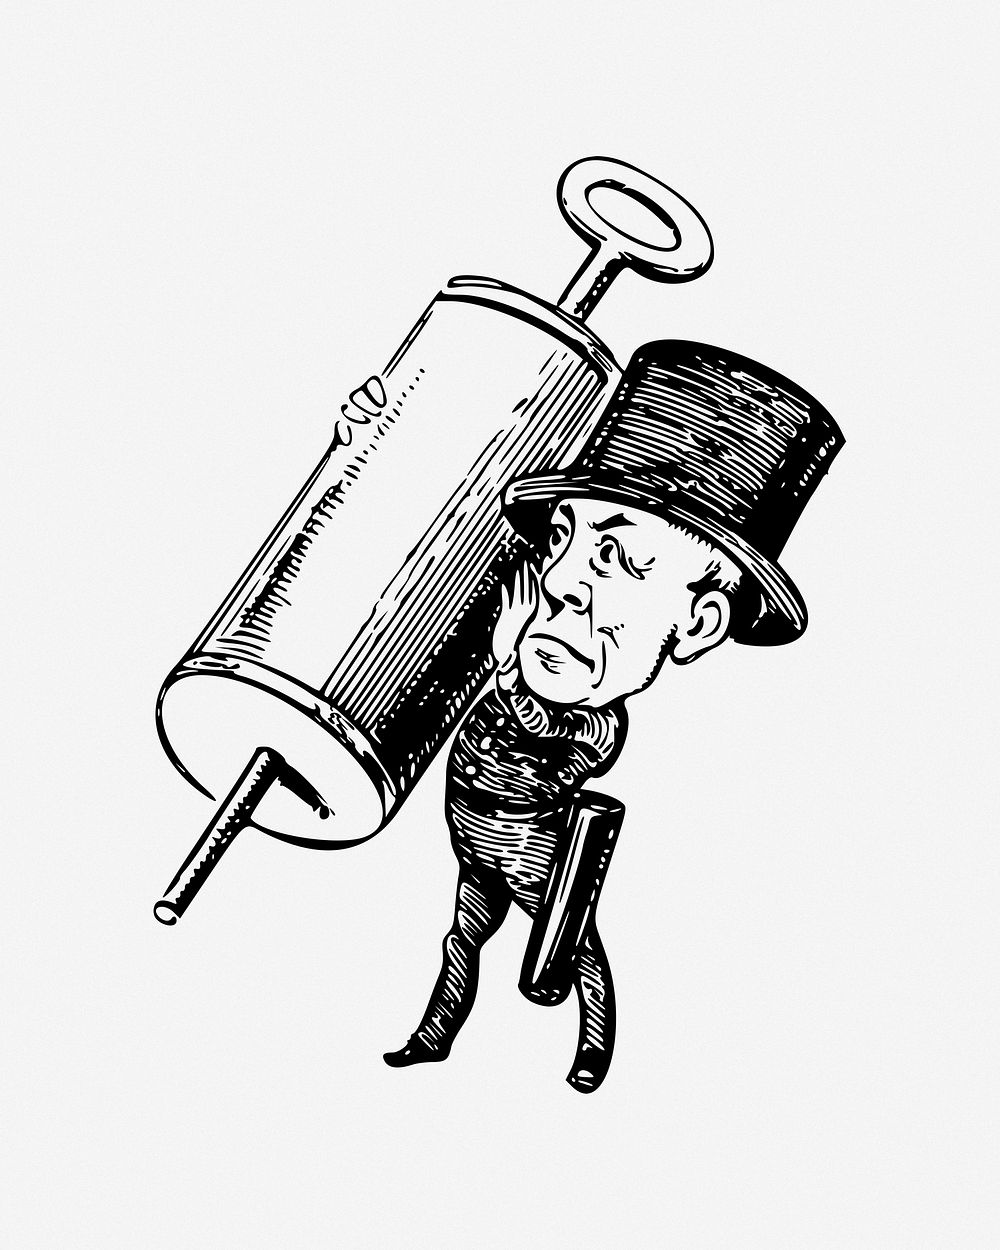 Man with syringe clip art. Free public domain CC0 image.